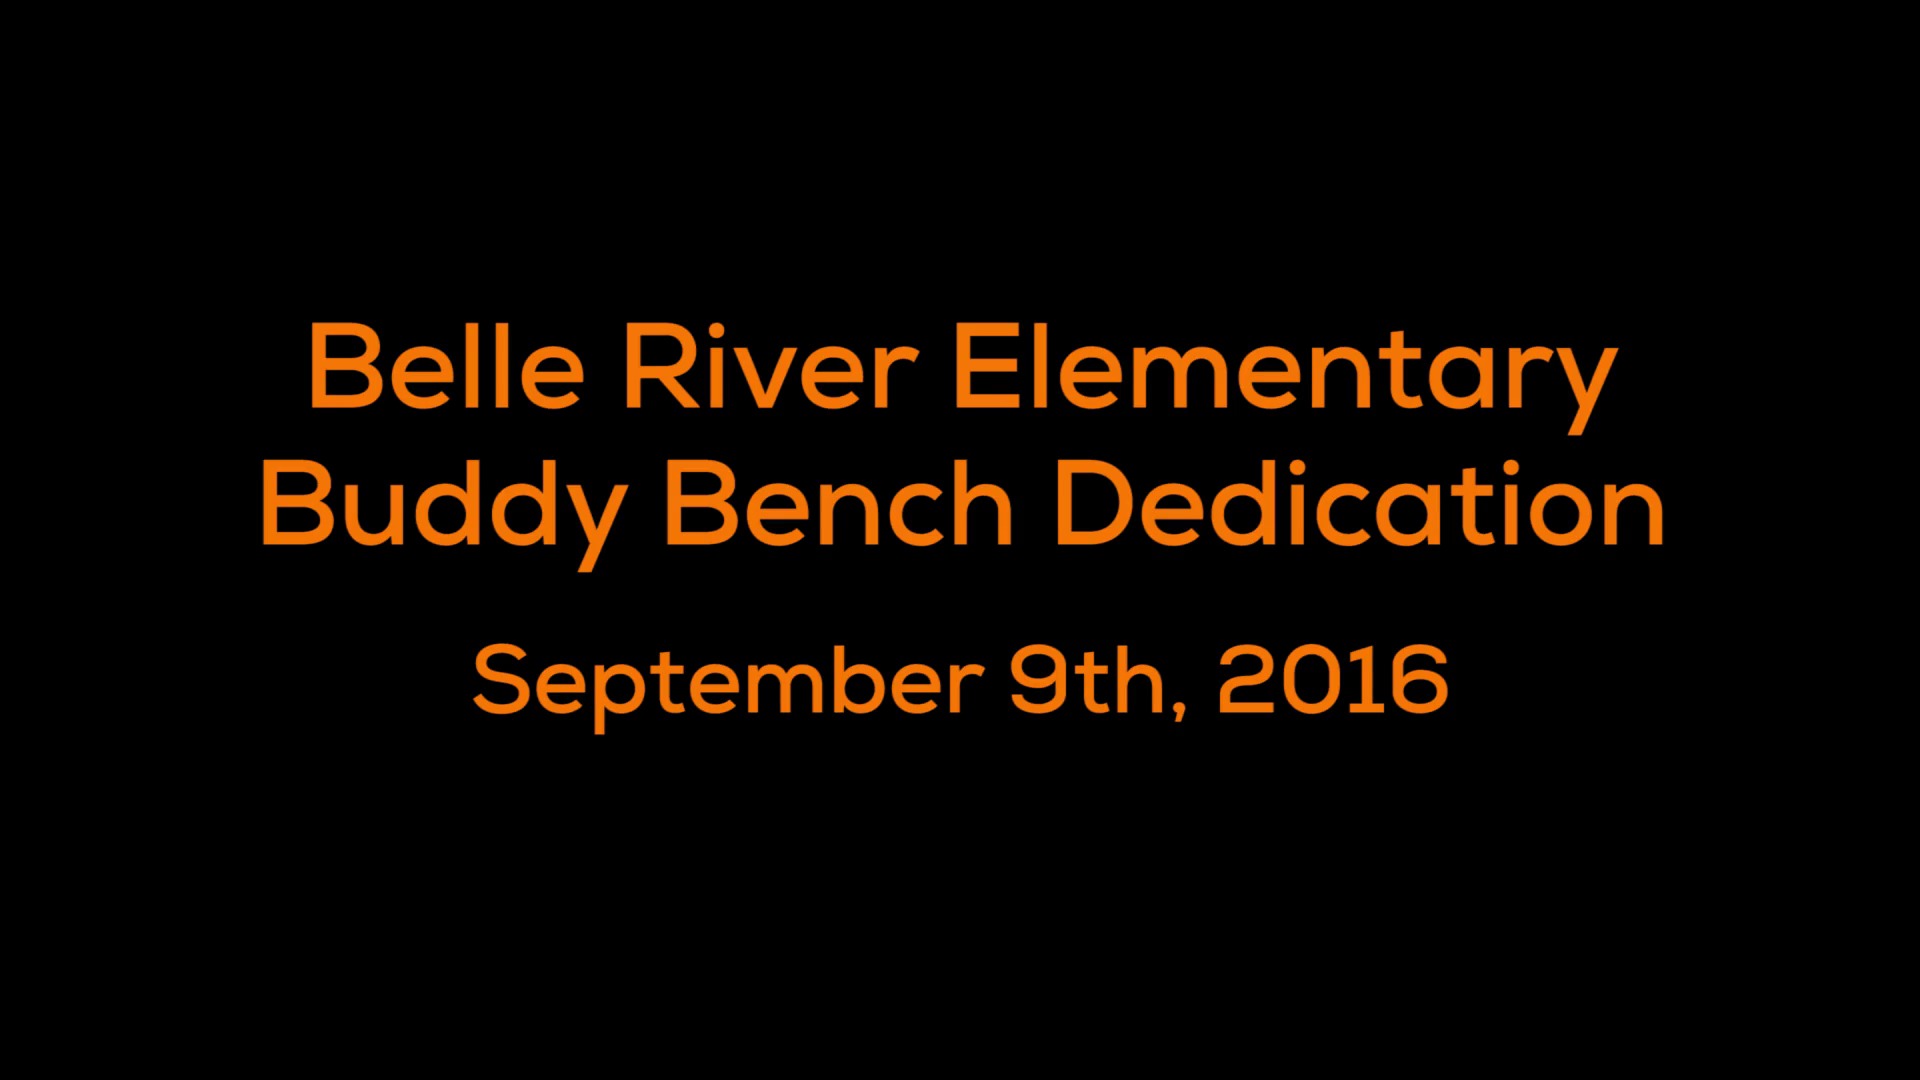 Belle River Elementary Buddy Bench Dedication 09.09.2016